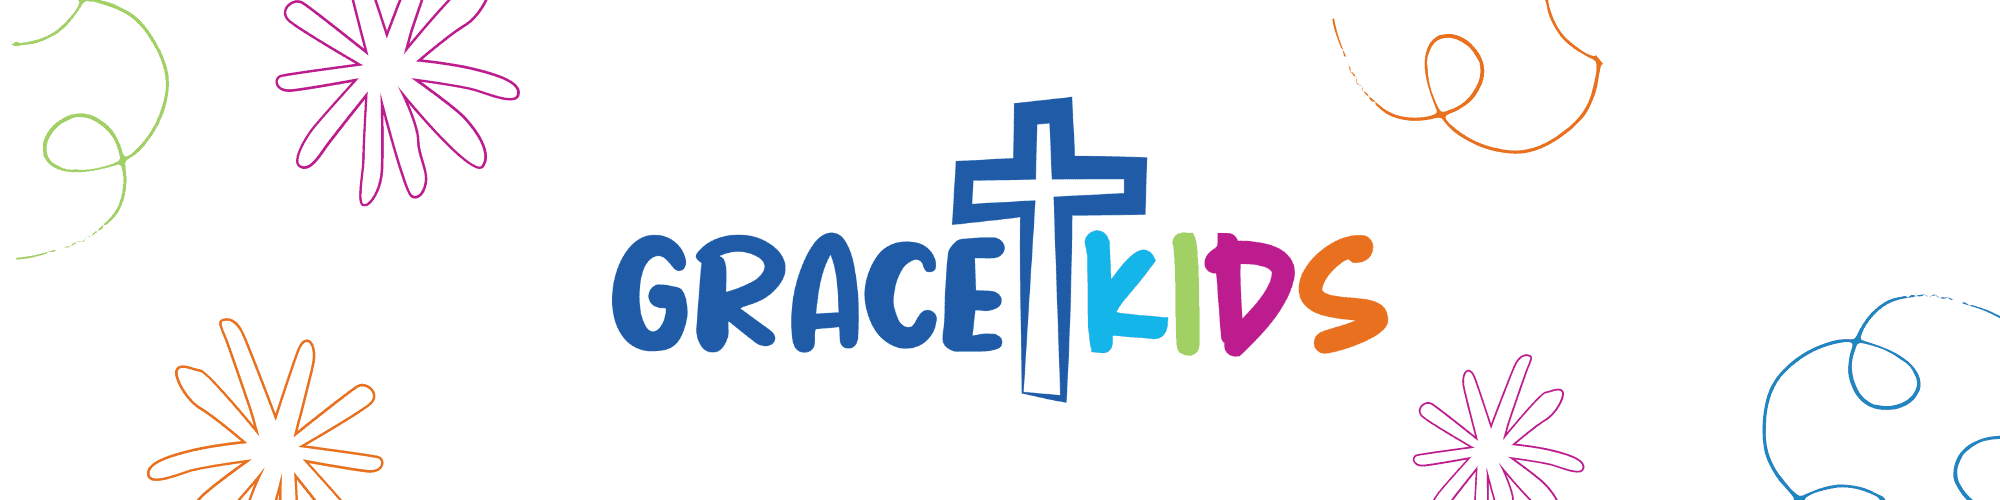 Grace Kids Website Banner